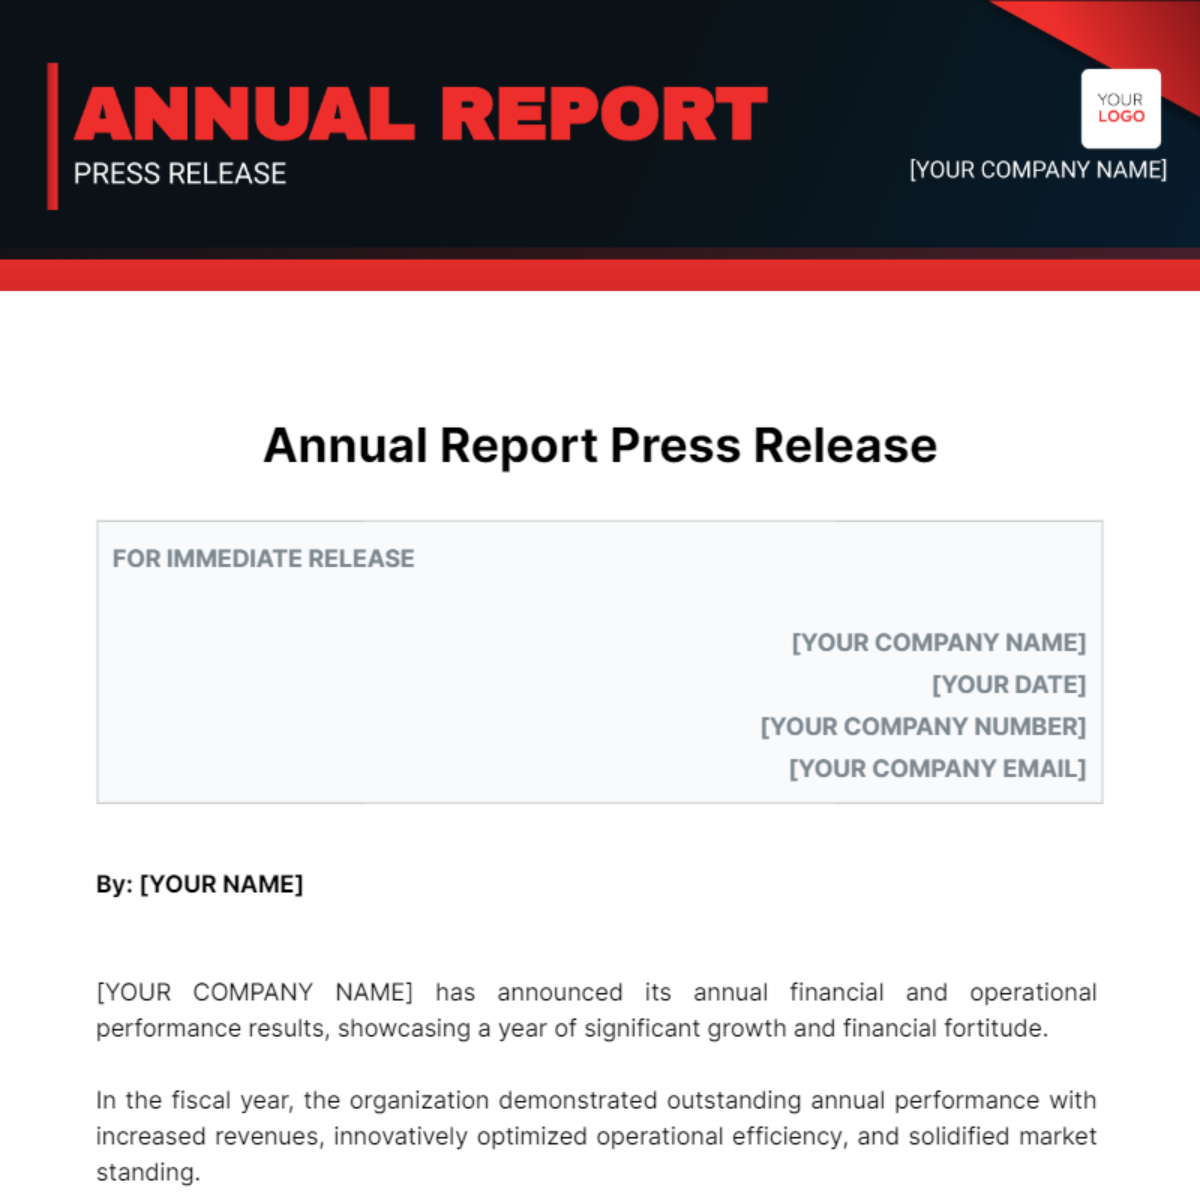 Annual Report Press Release Template